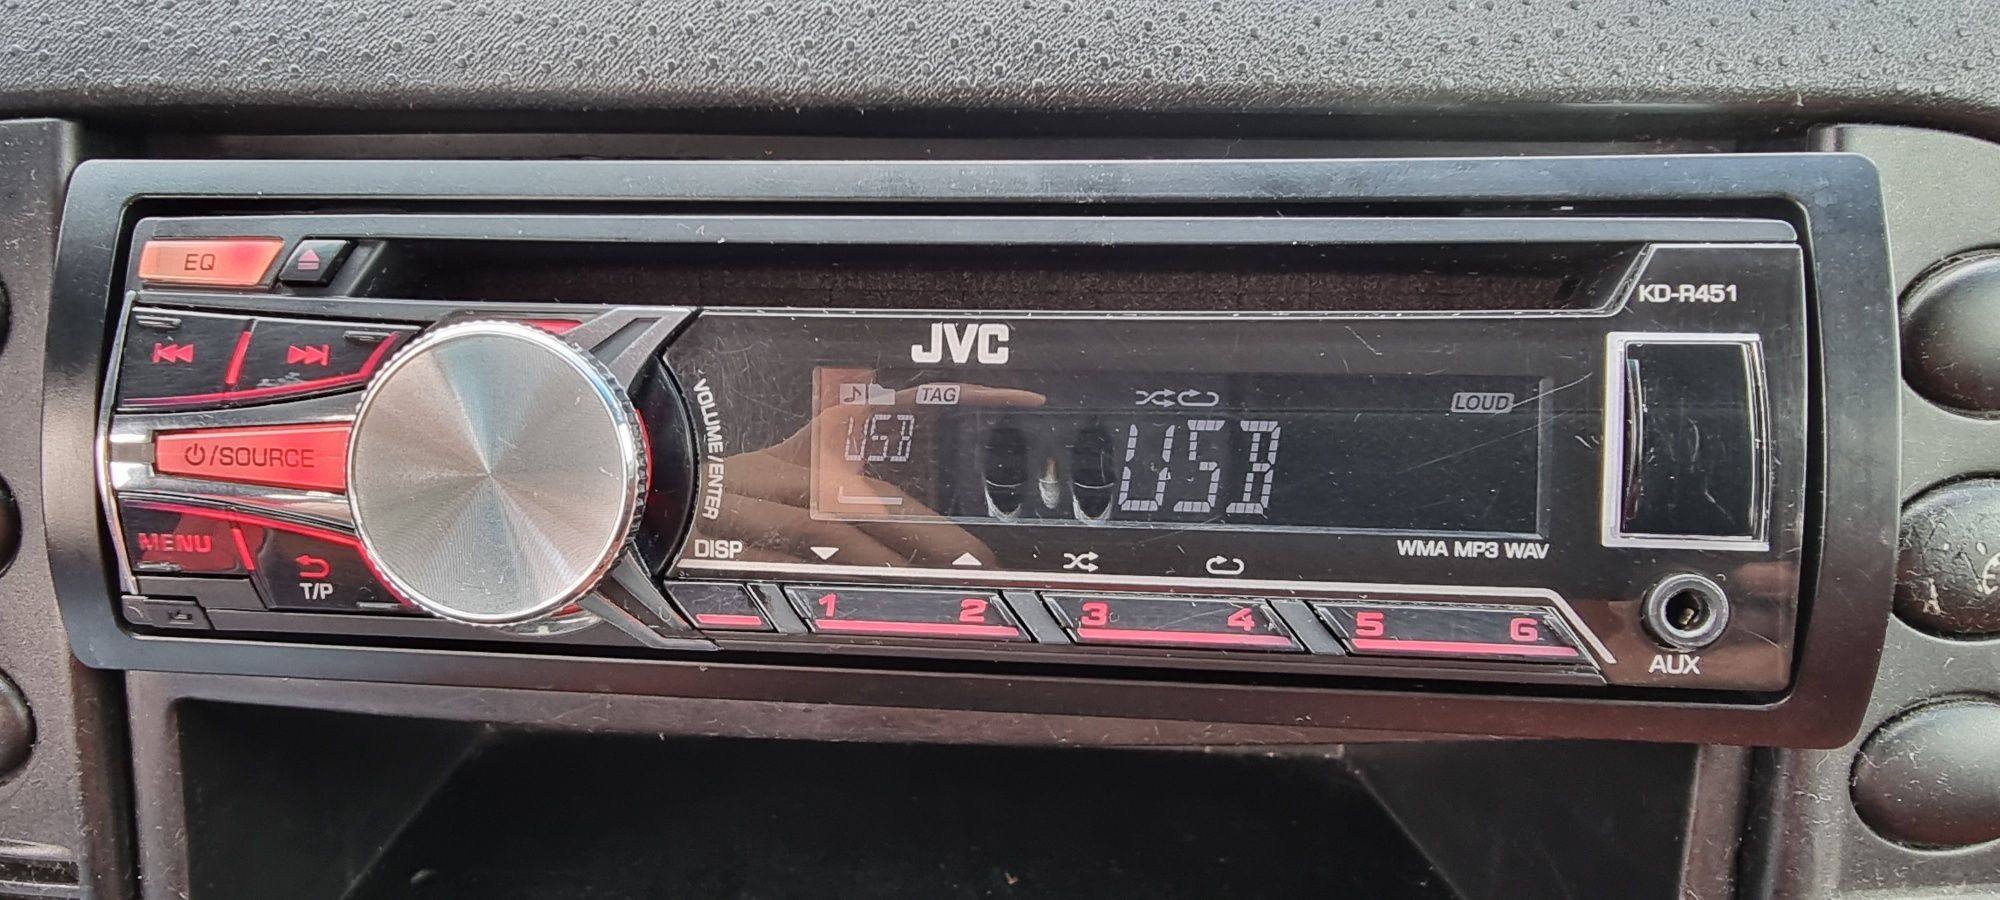 CD player JVC mp3 stic auxiliar